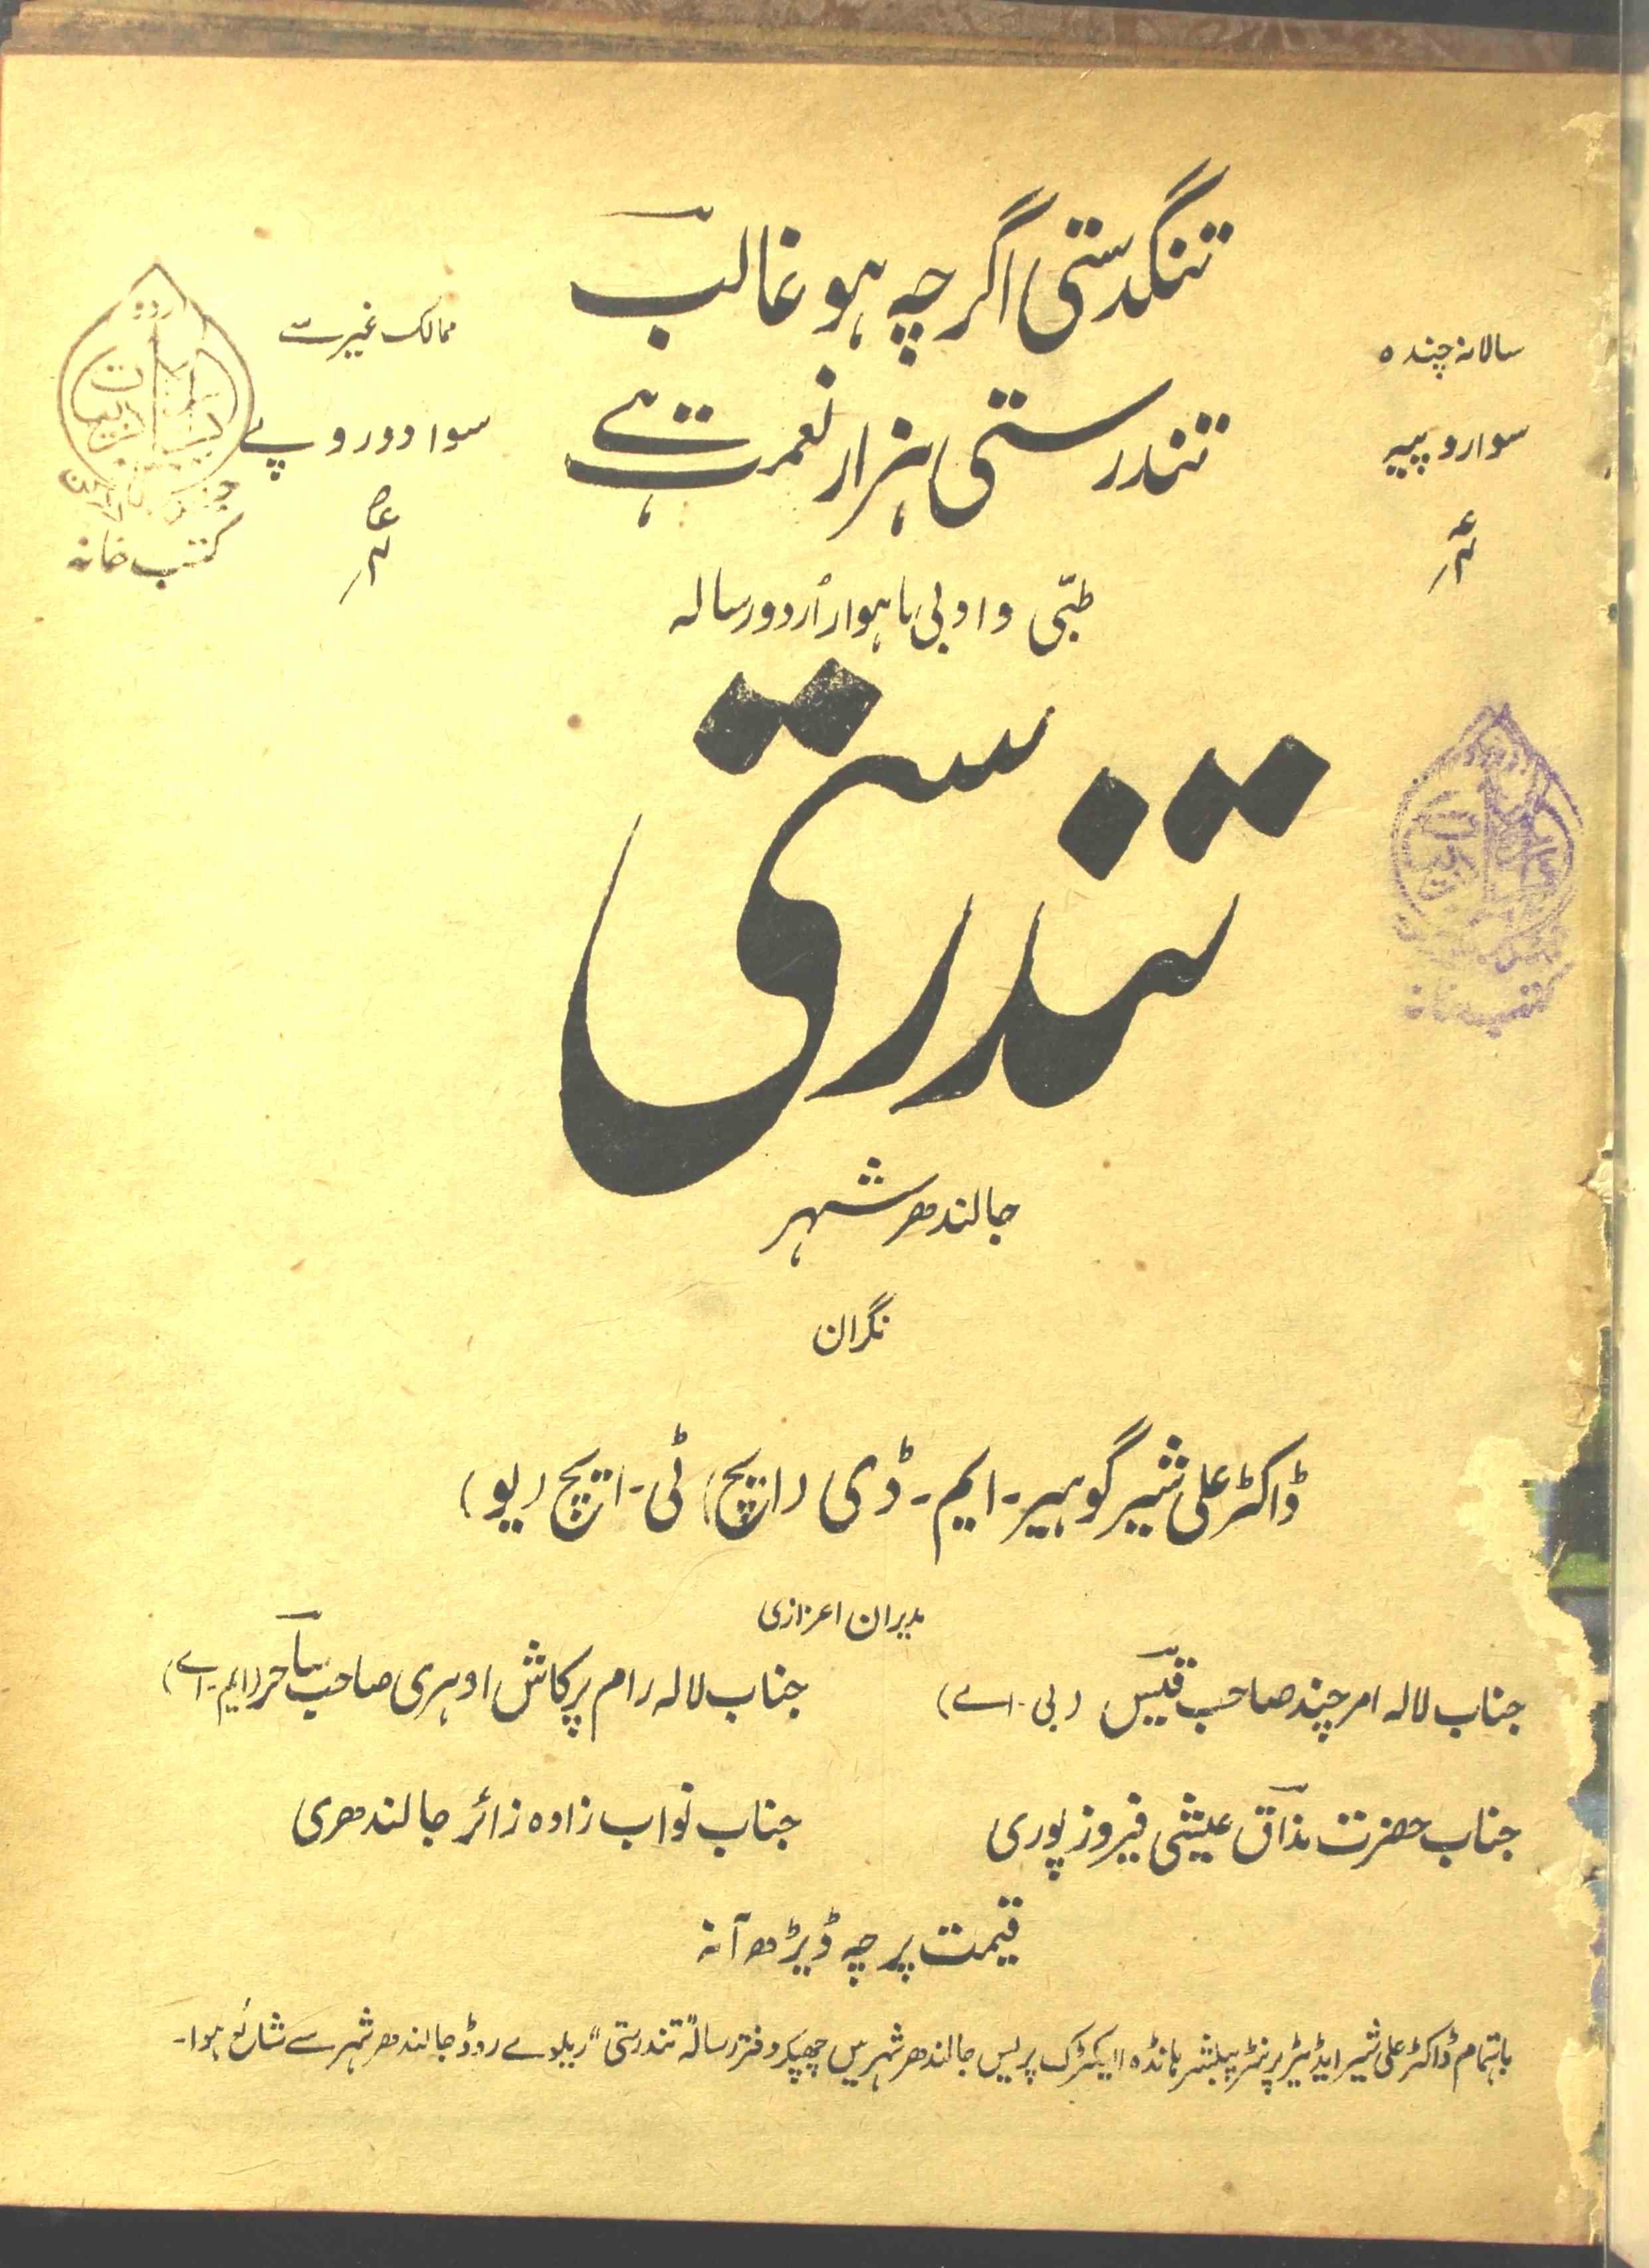 Tandrosti Jild 4 No 5 August 1939-Shumara Number-005